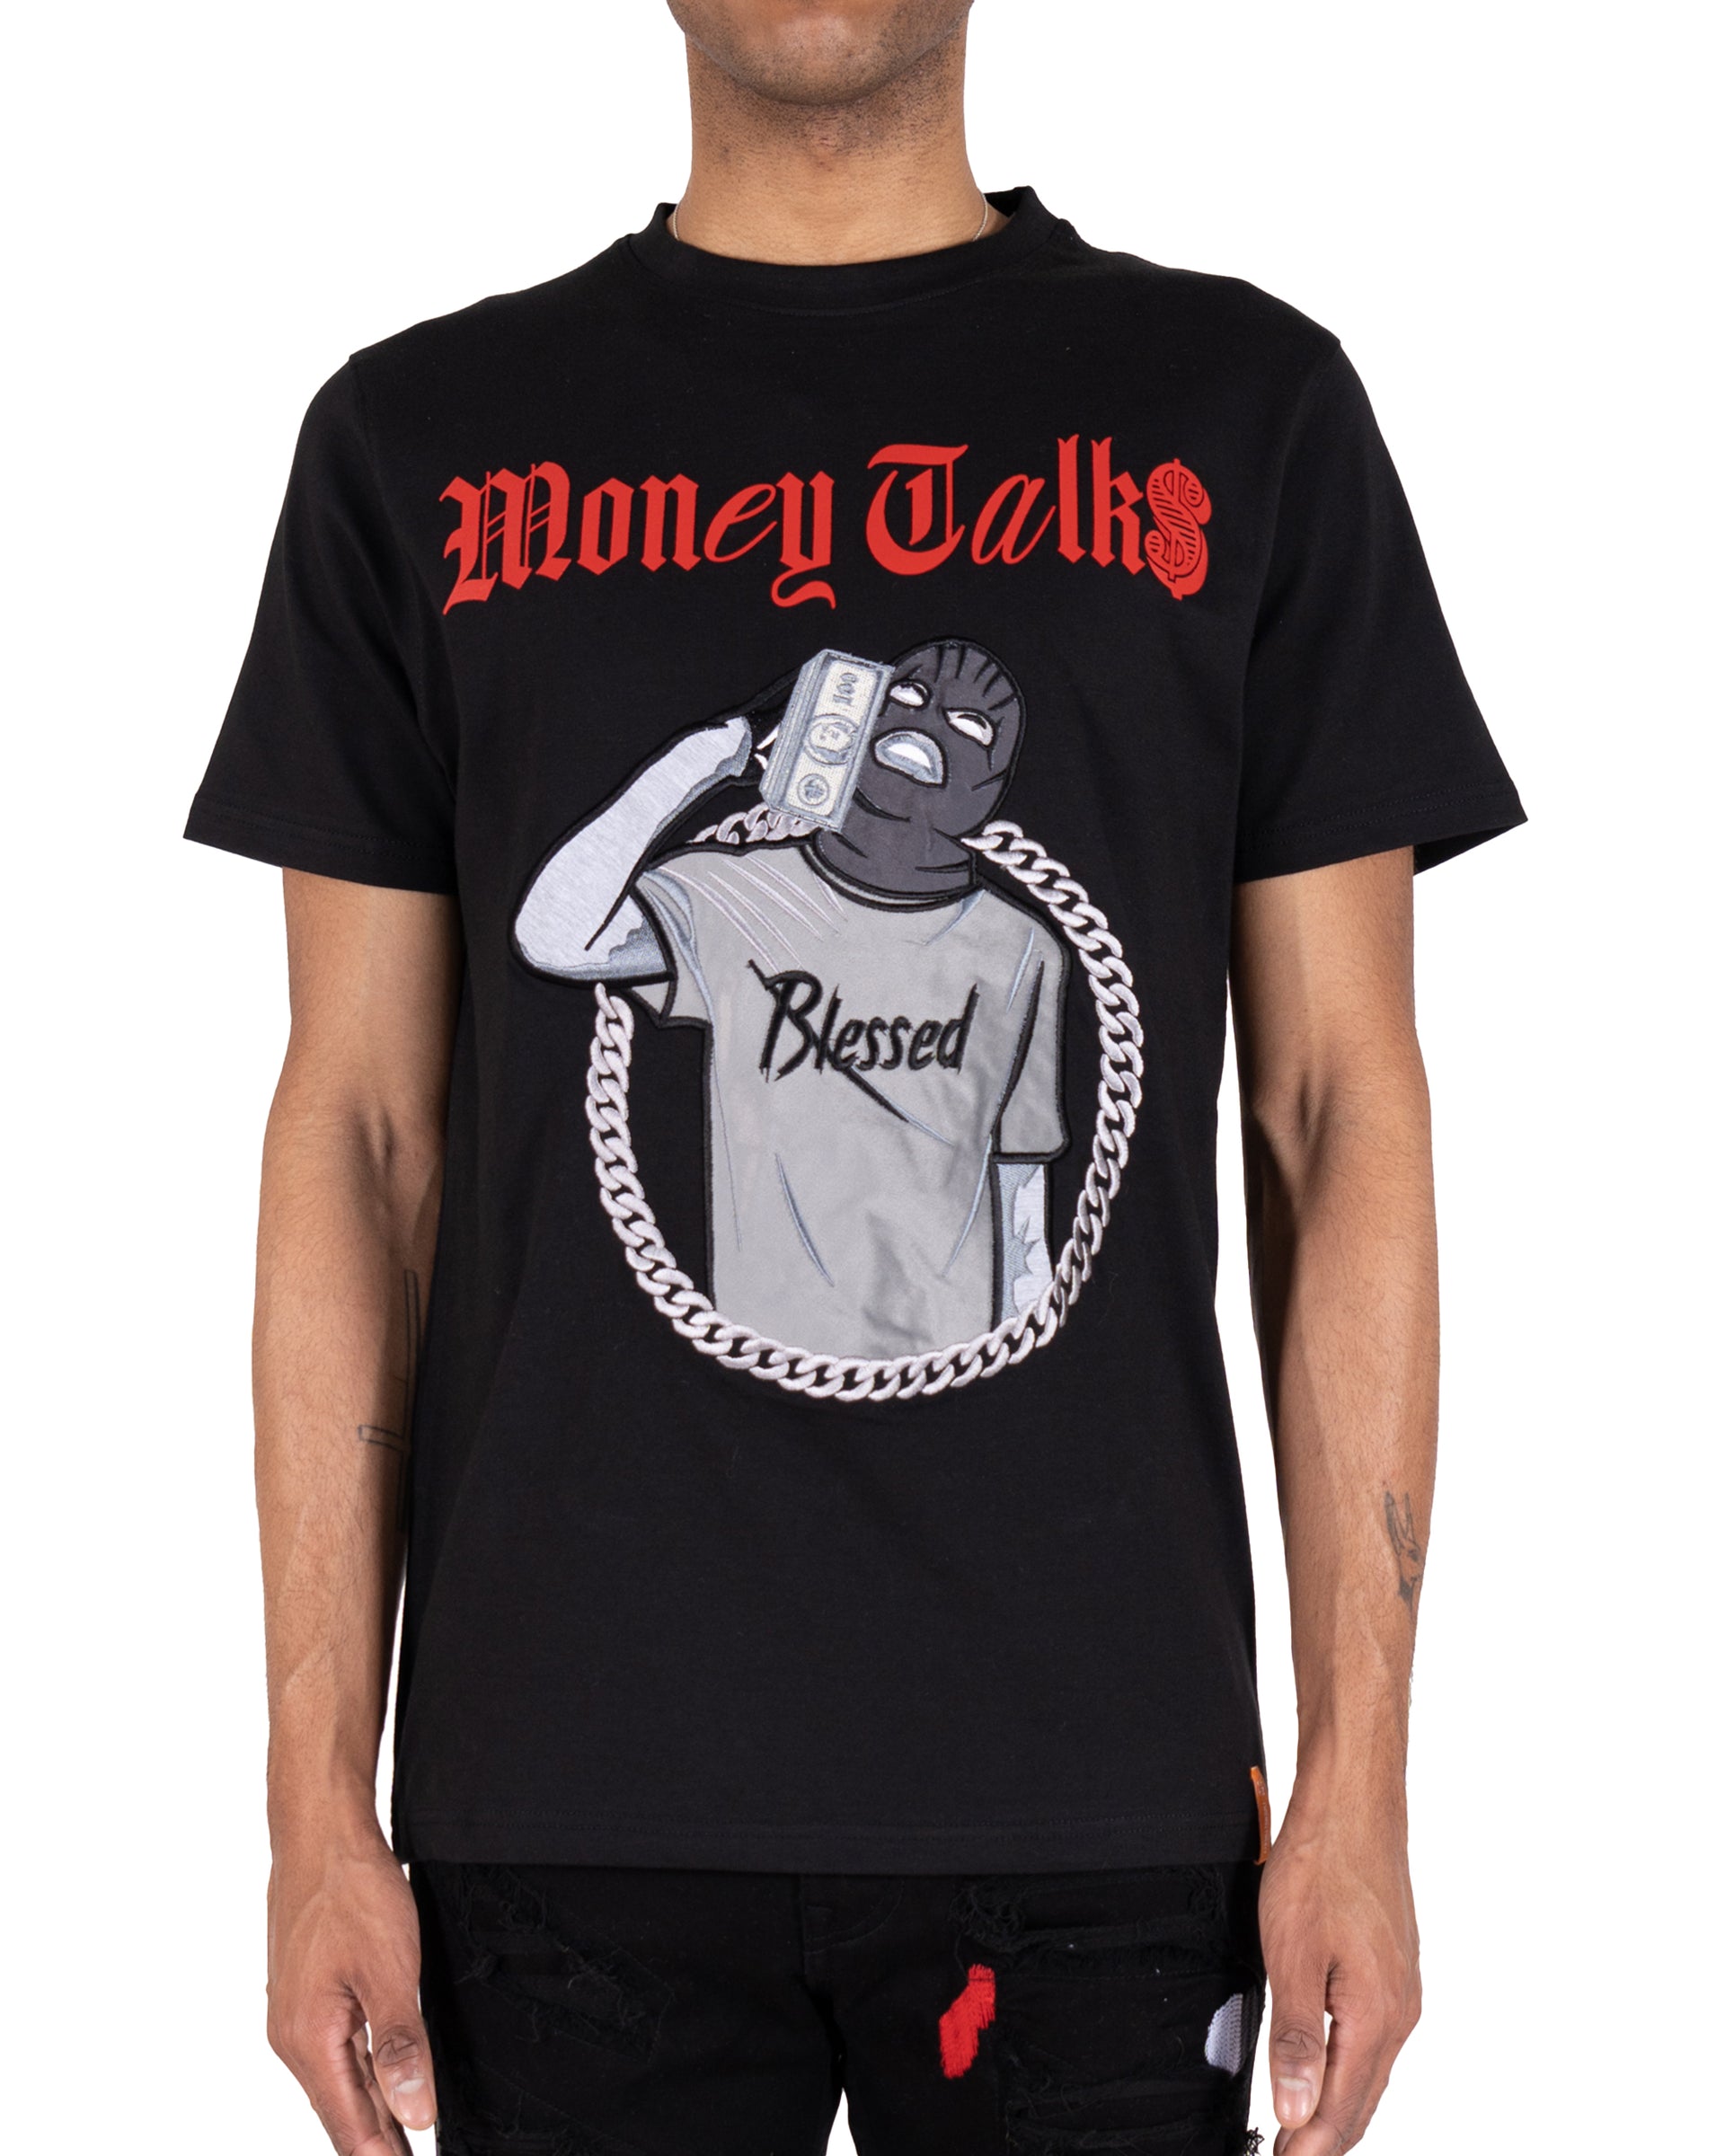 Men's "Money Talks" Graphic T-Shirt | Black